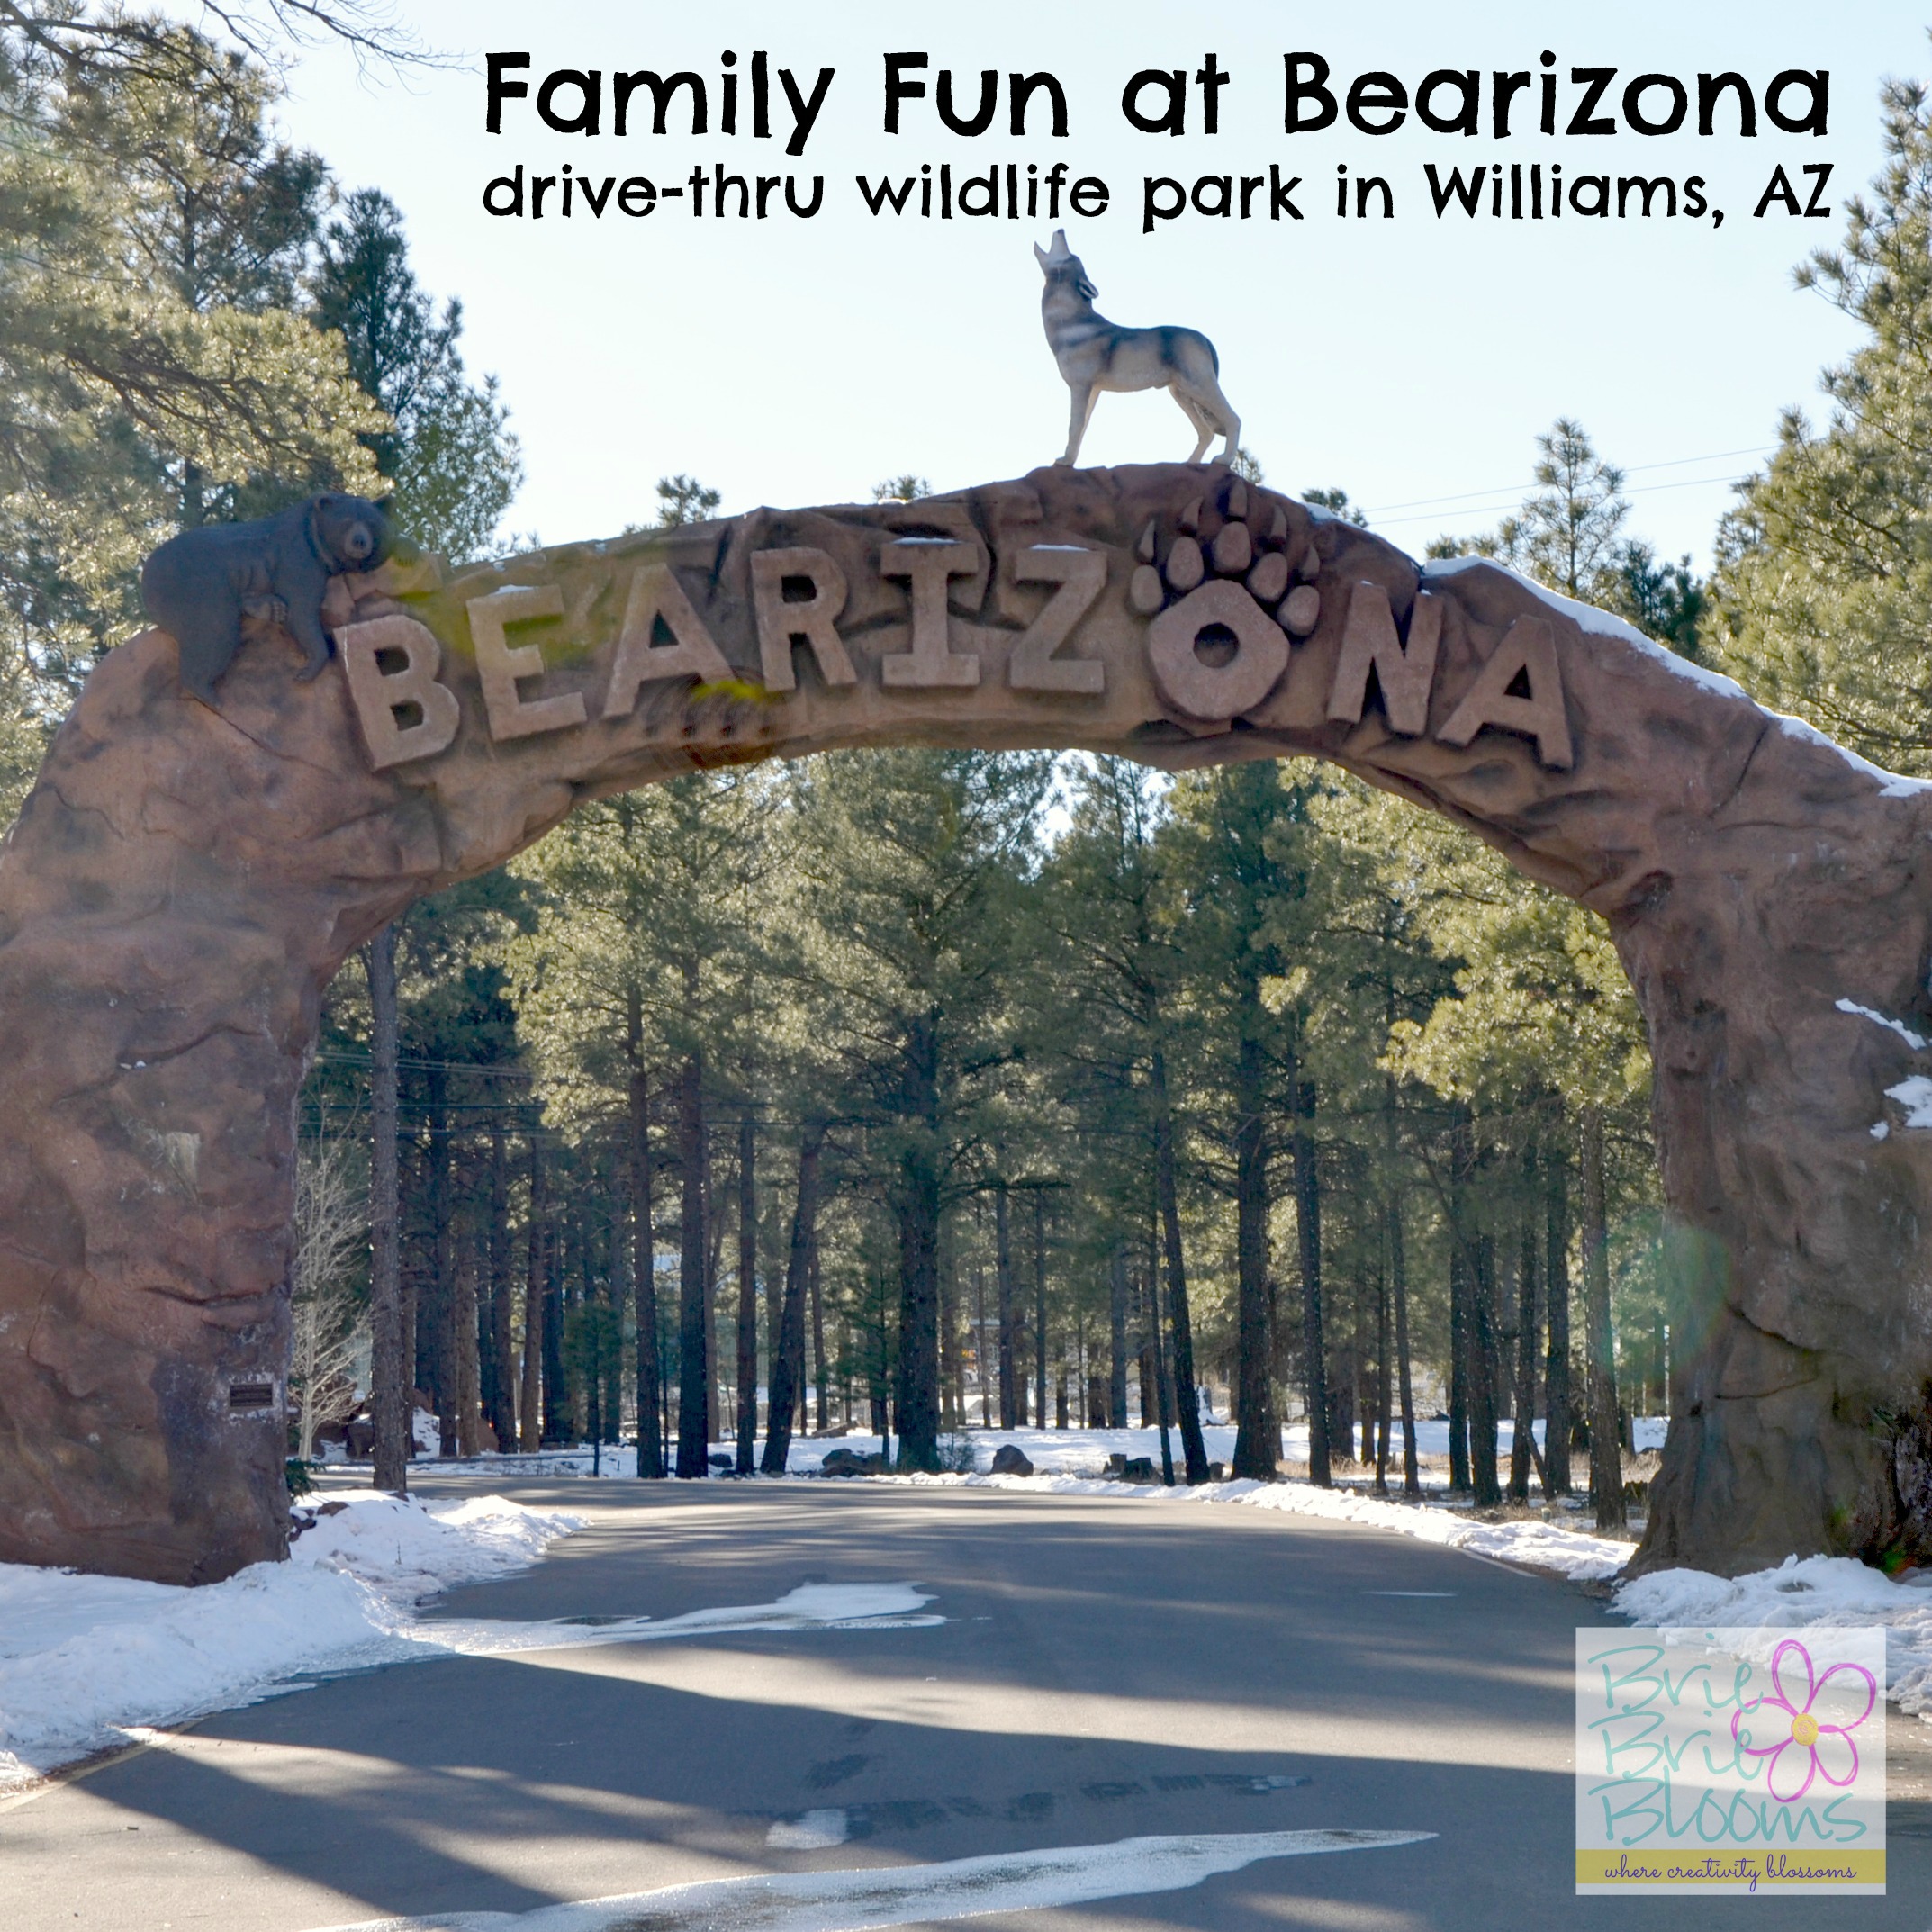 Family fun at Bearizona drive-thru wildlife park in Williams, Arizona